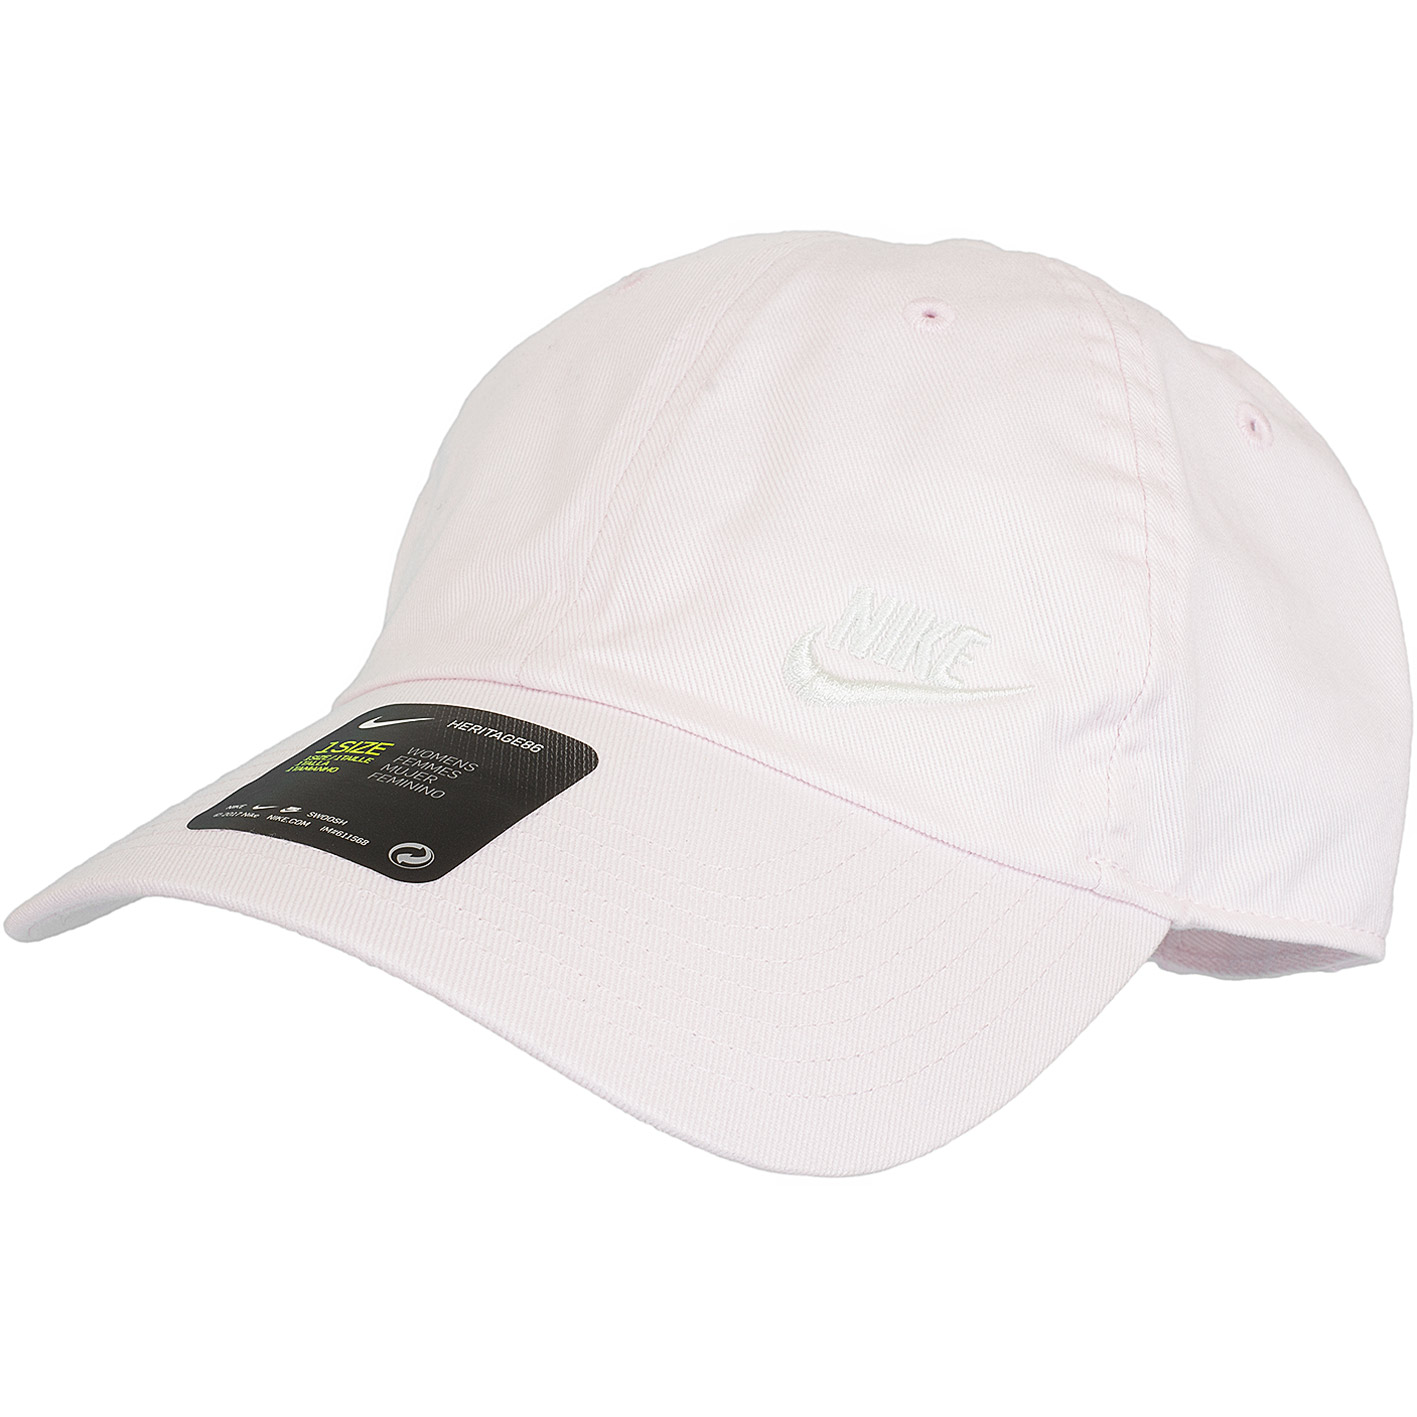 ☆ Nike Damen Snapback Cap H86 Futura Classic pink/sail - hier bestellen!